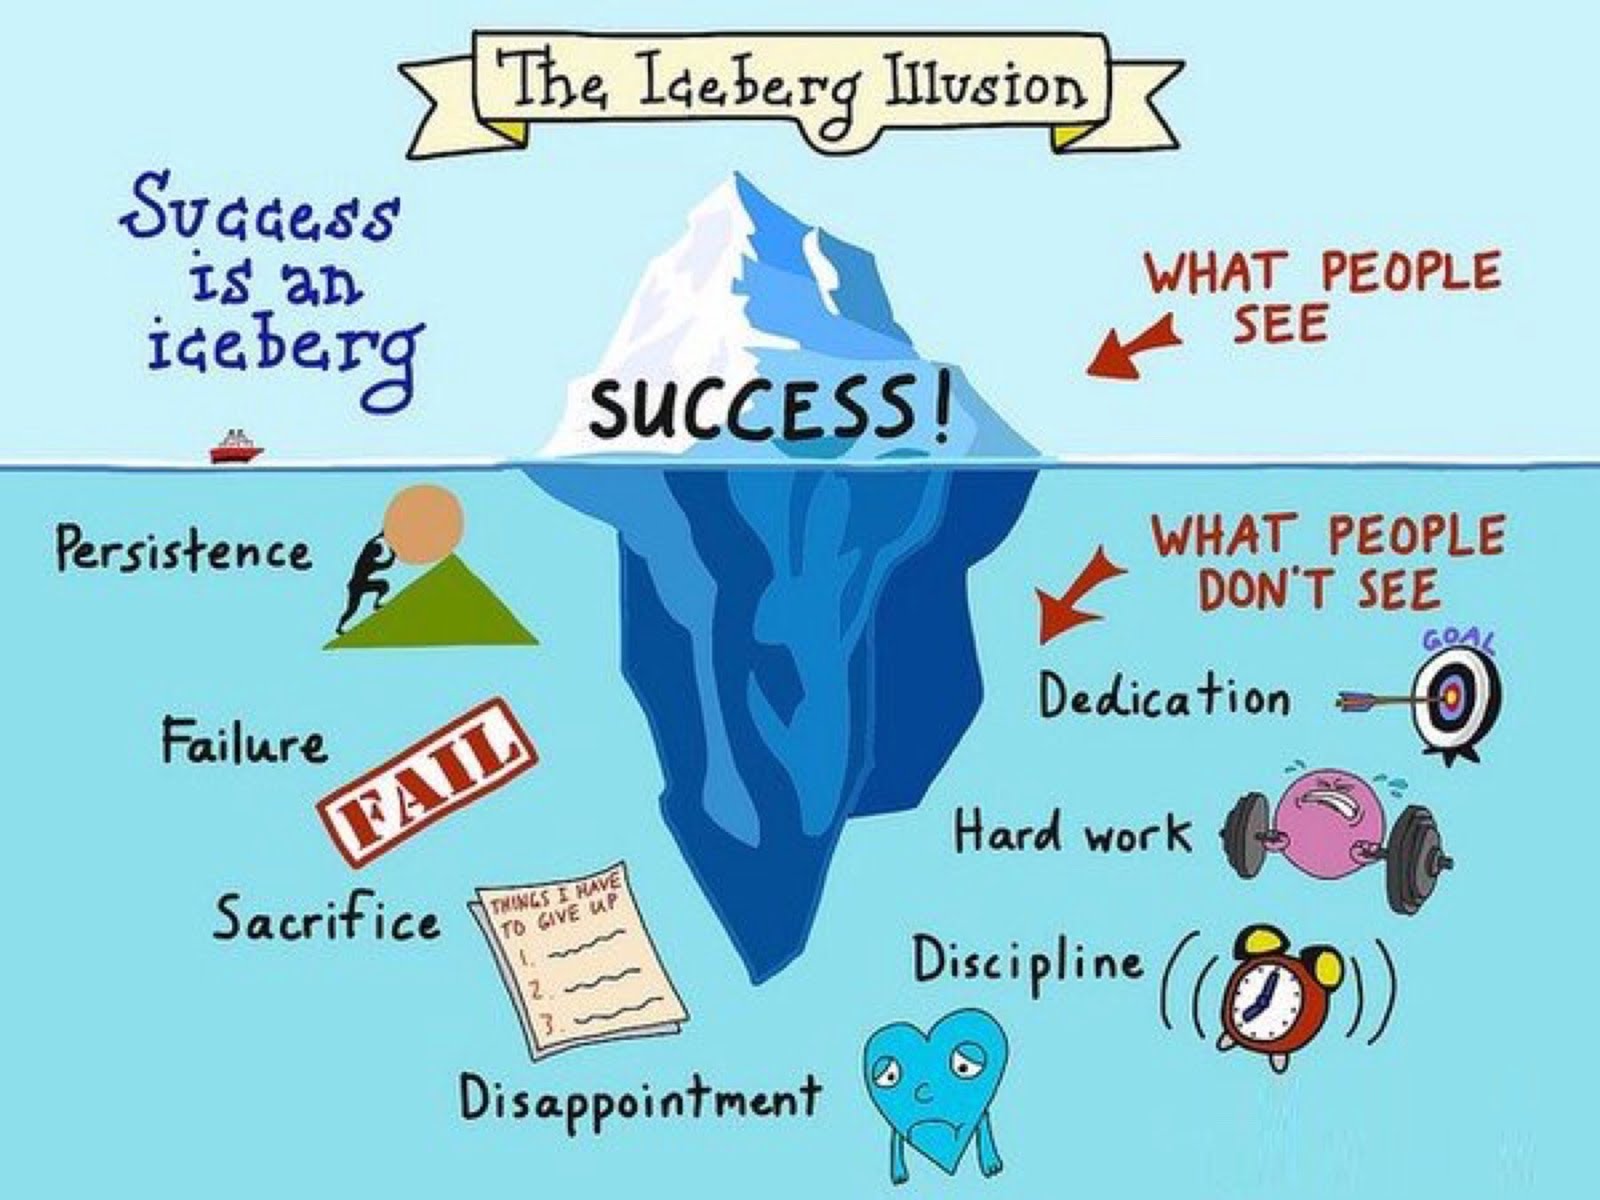 SUCCESS is an ICEBERG!